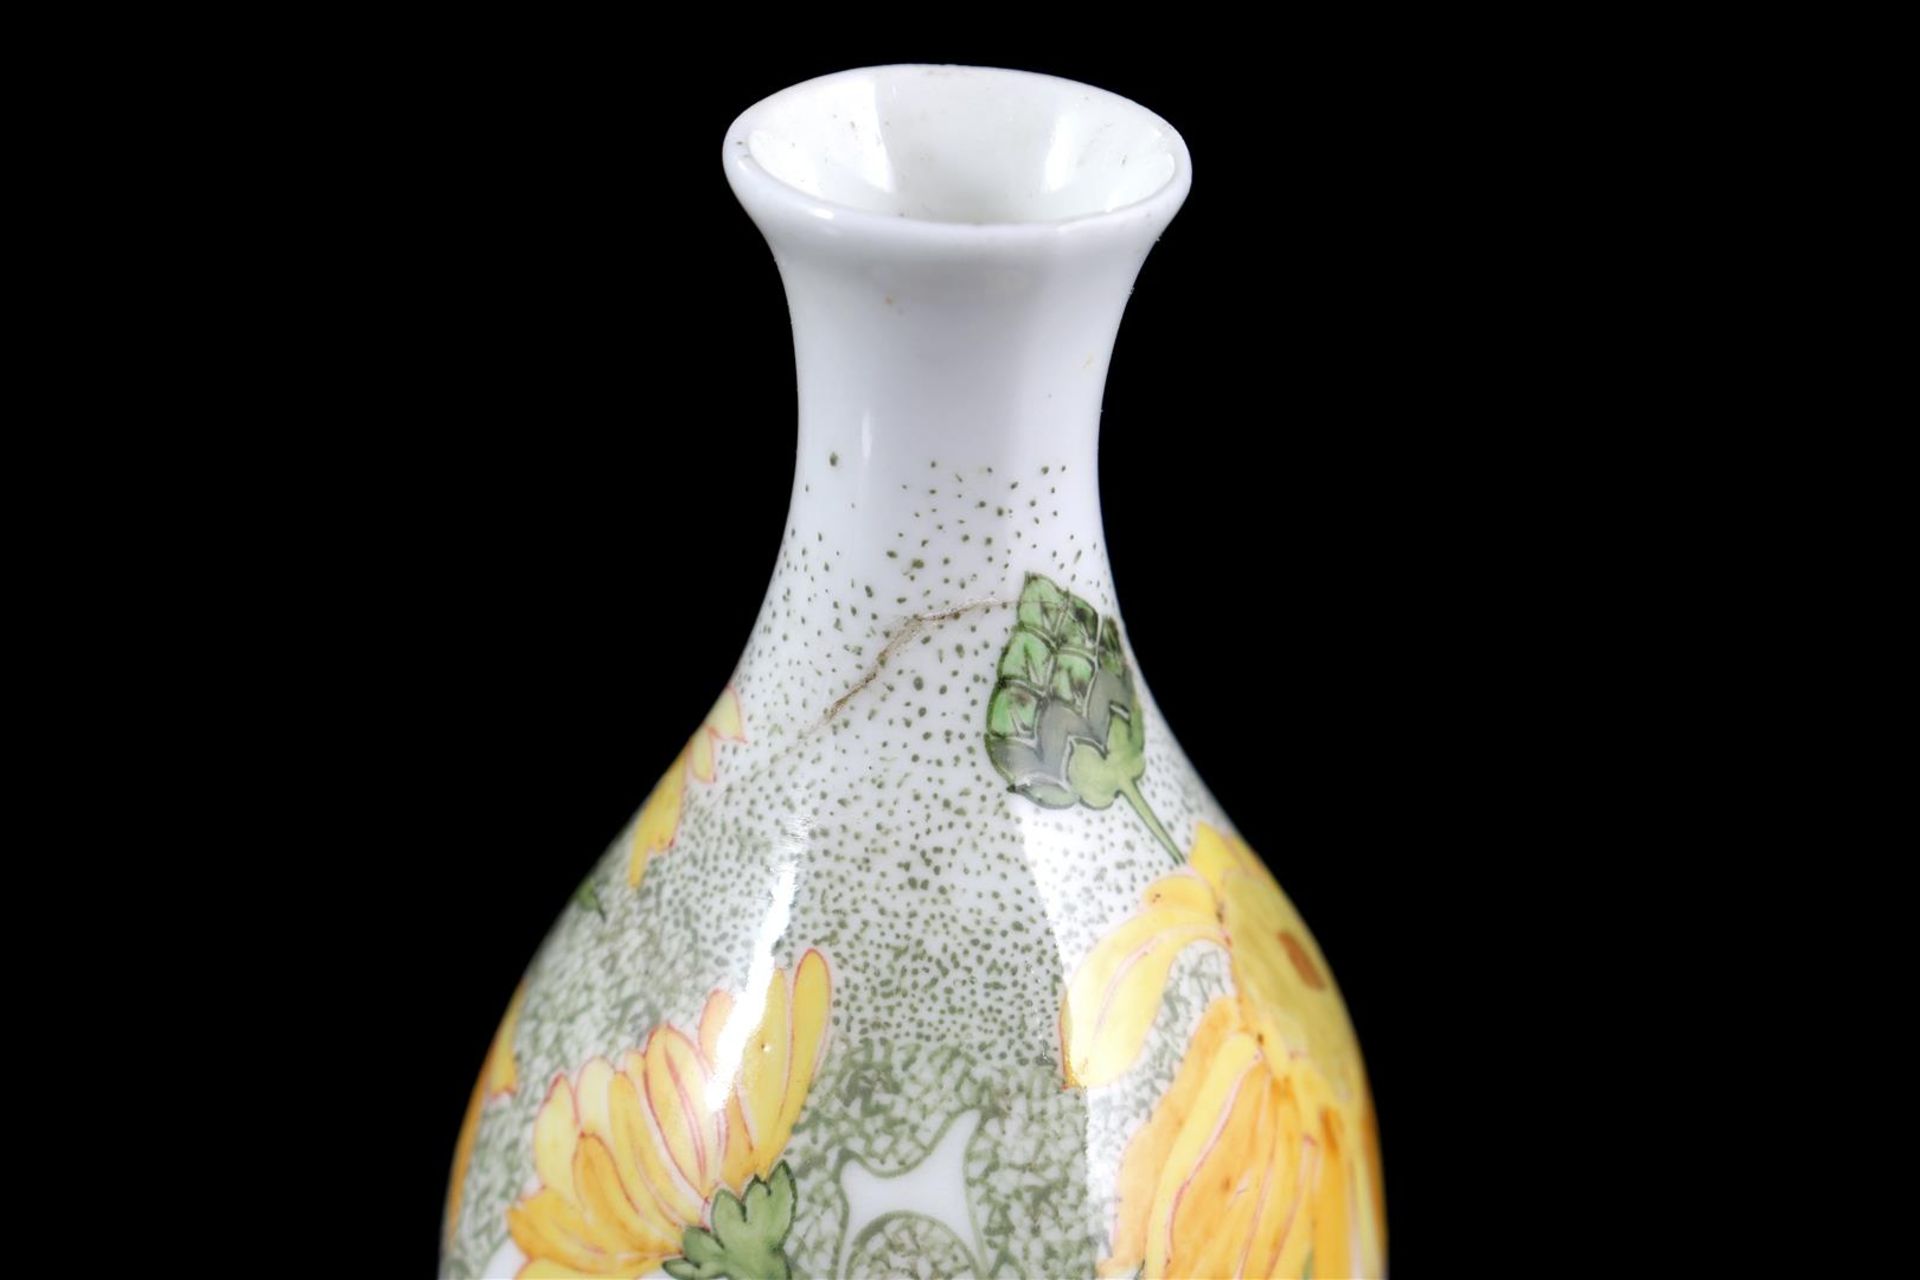 Rozenburg The Hague eggshell porcelain vase with floral decor - Image 6 of 7